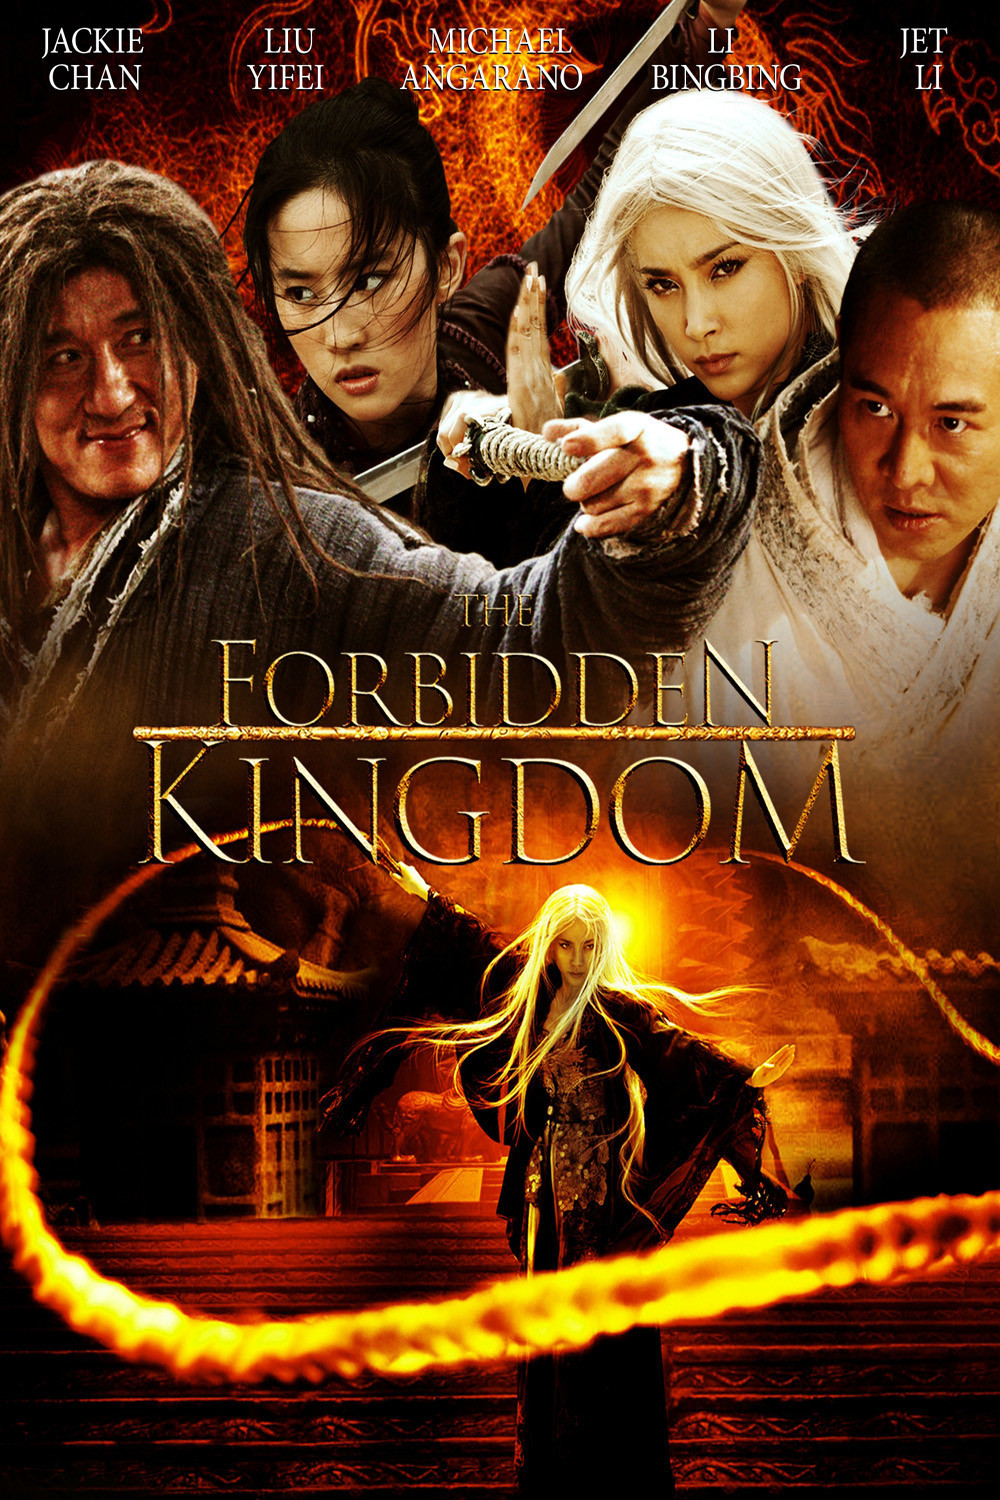 The Forbidden Kingdom #4